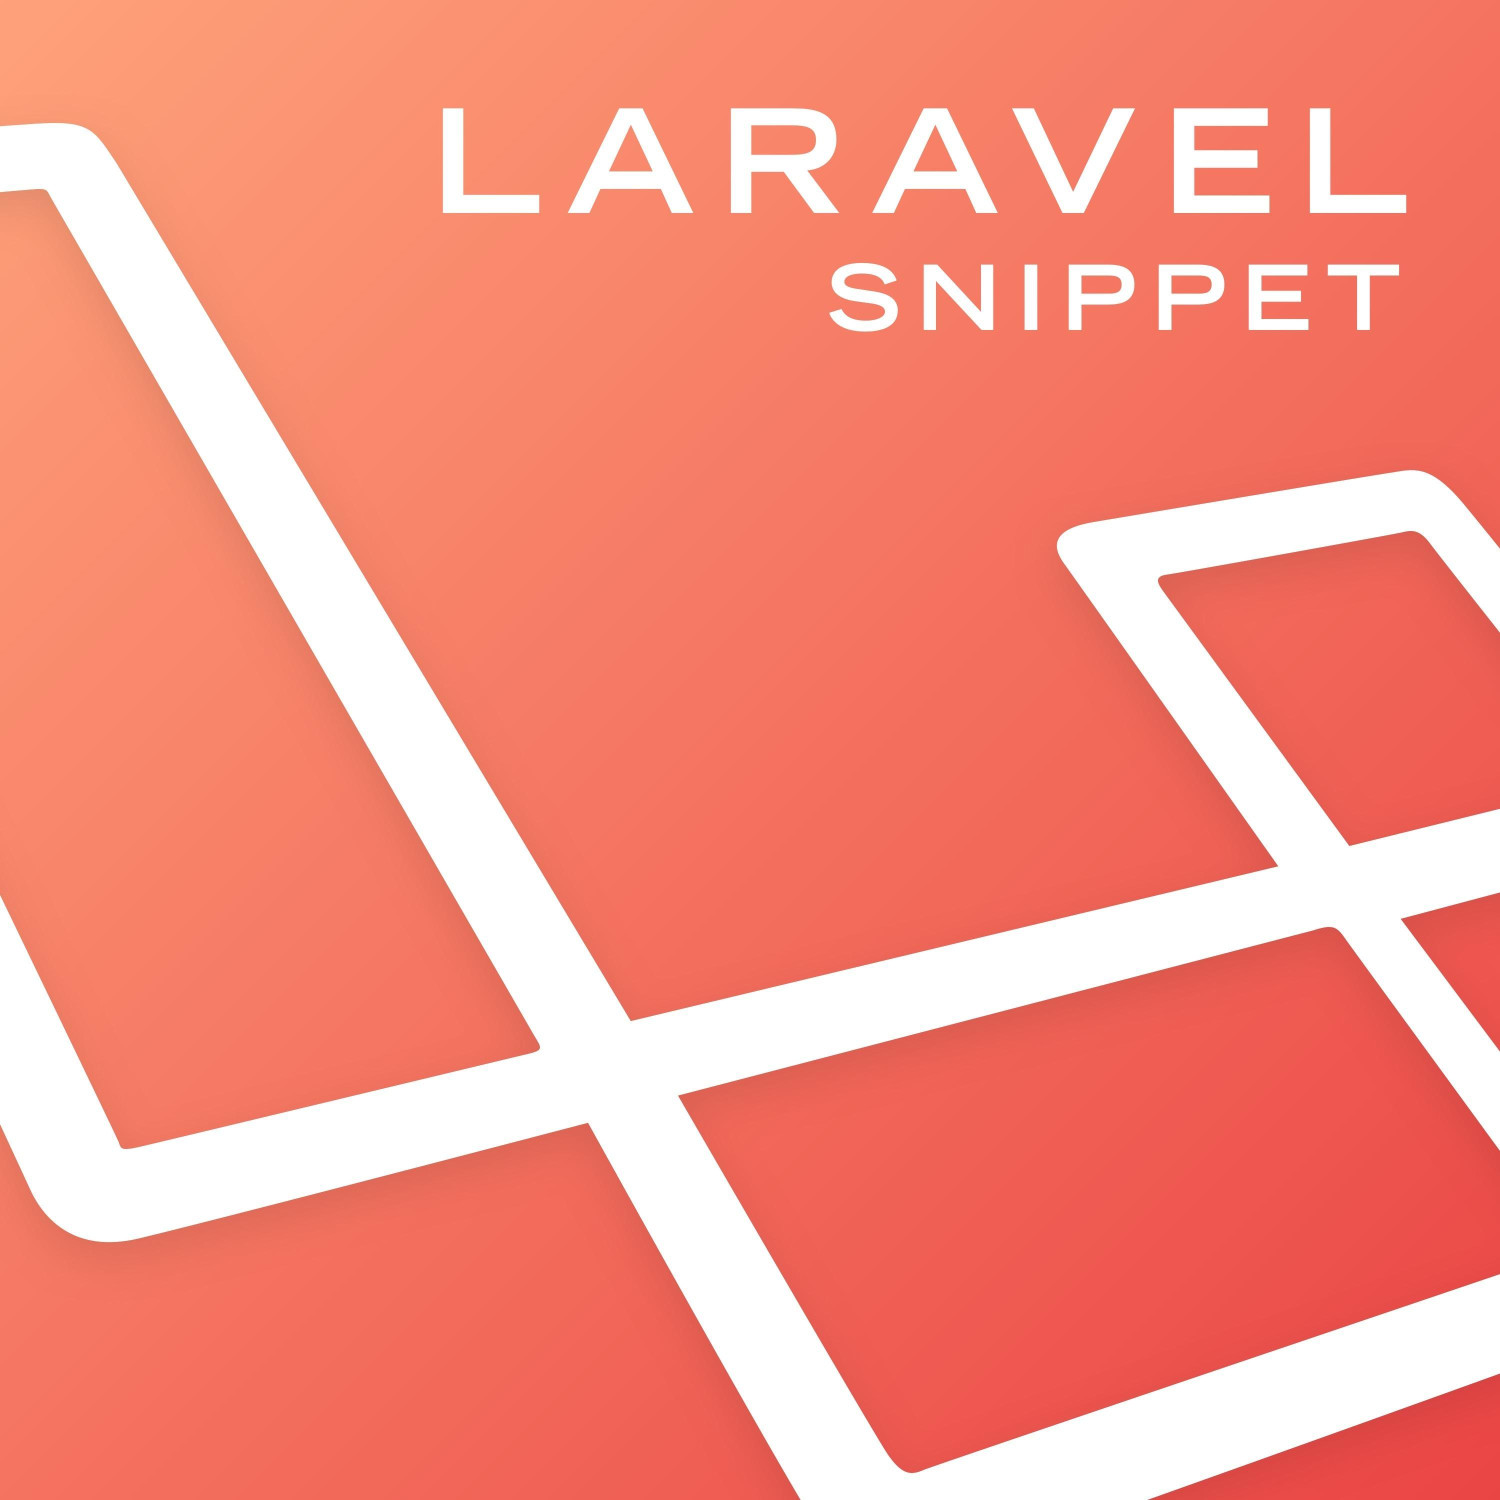 Taylor Otwell's Laravel podcast